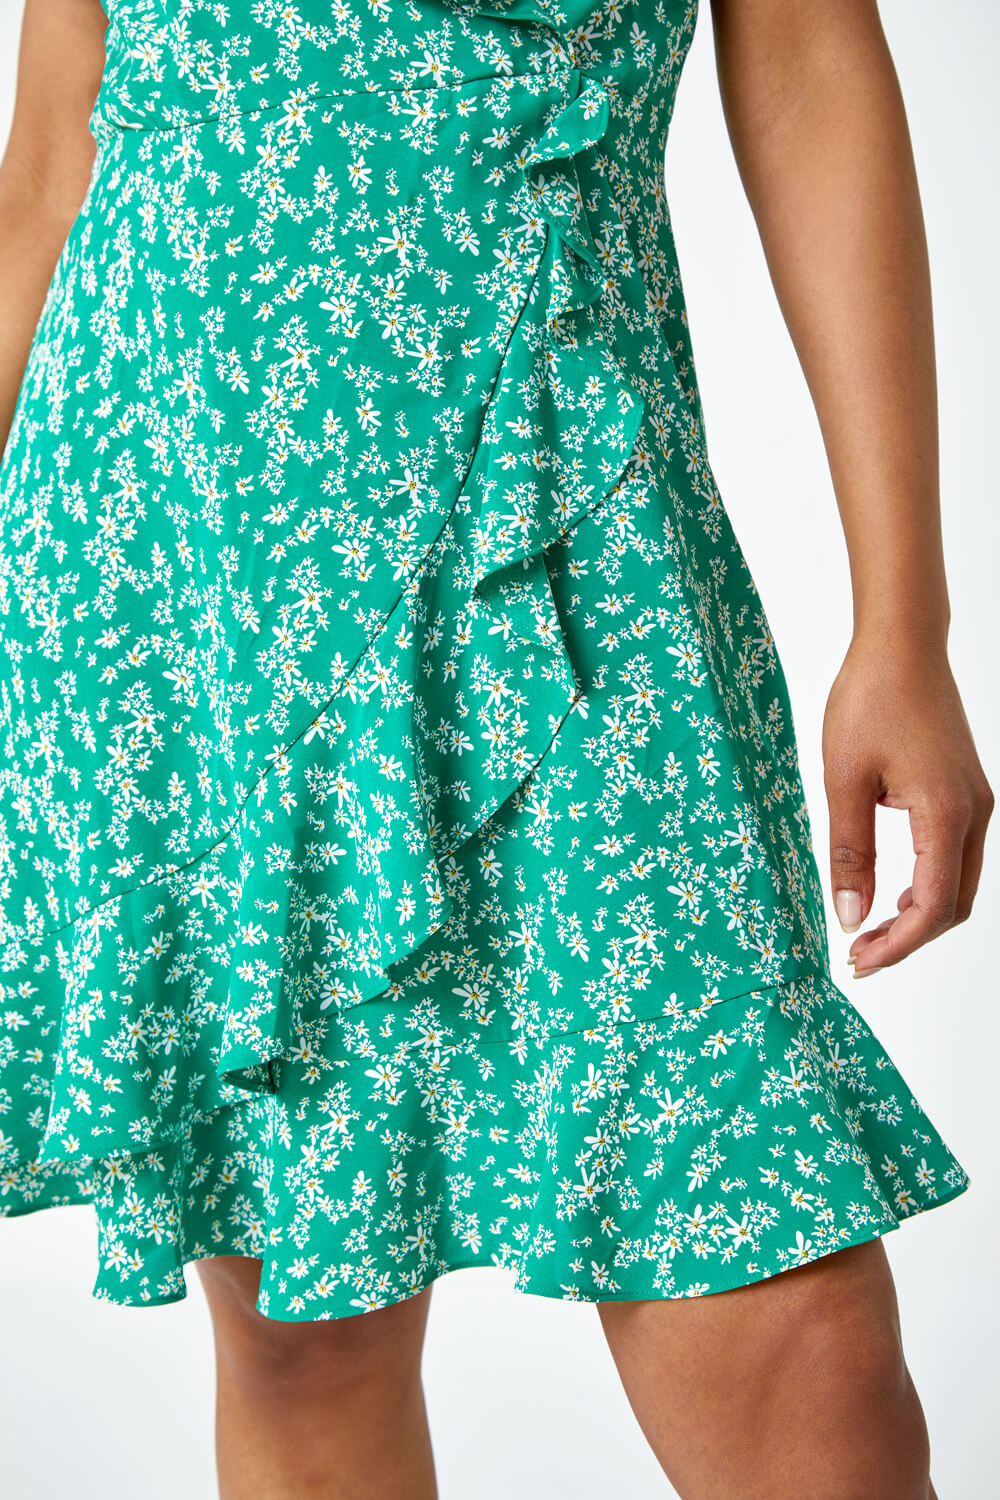 Green Petite Floral Print Ruffle Dress, Image 5 of 5